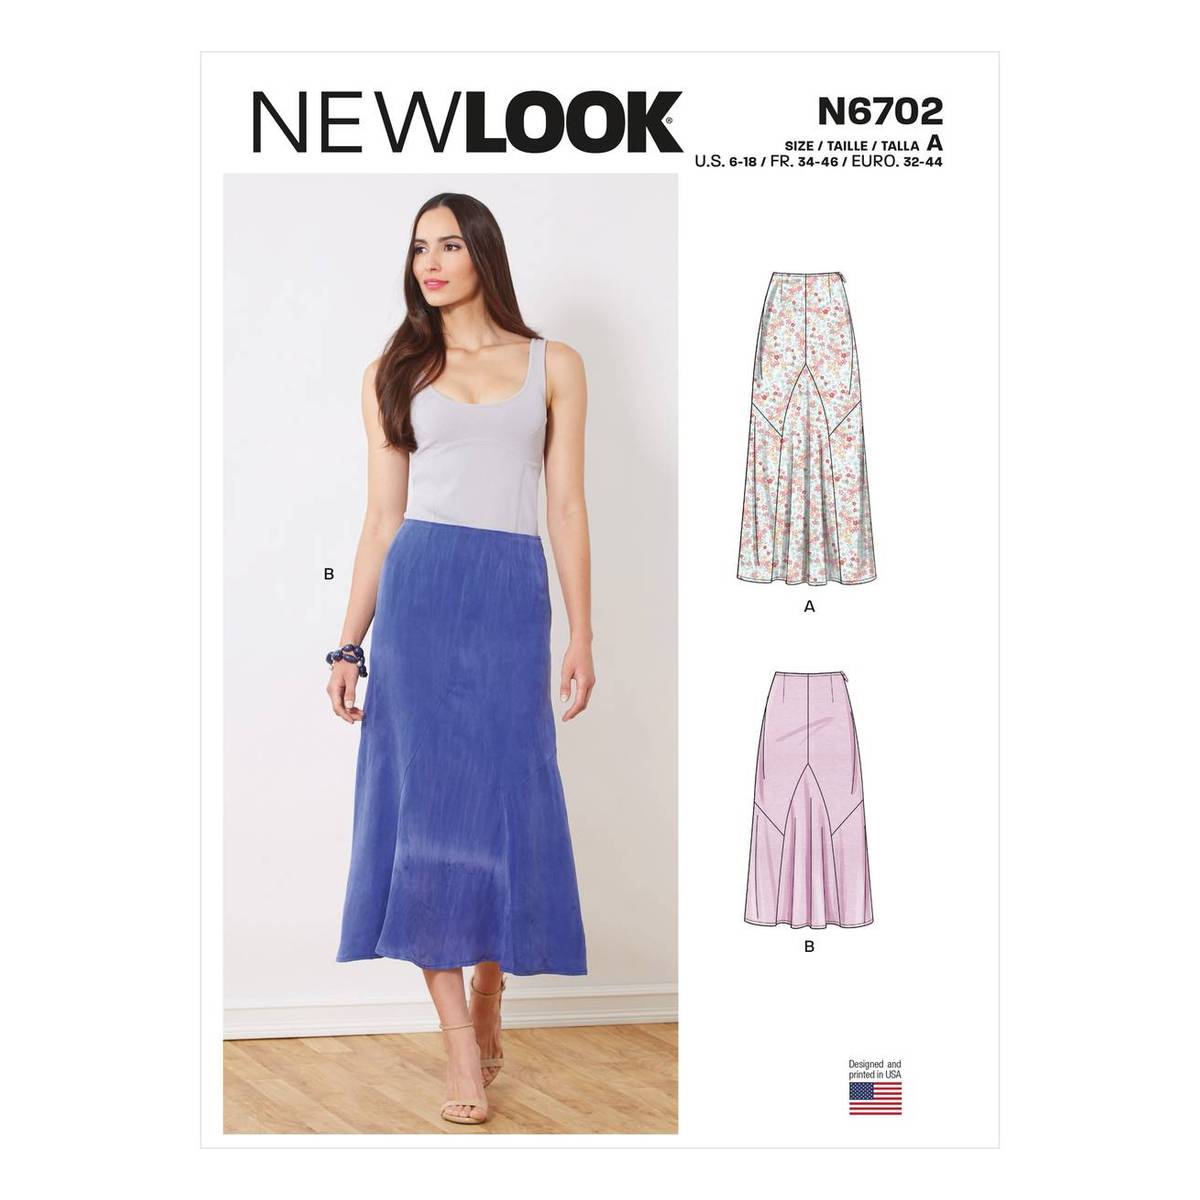 New Look Women’s Skirt Sewing Pattern N6702 | Hobbycraft